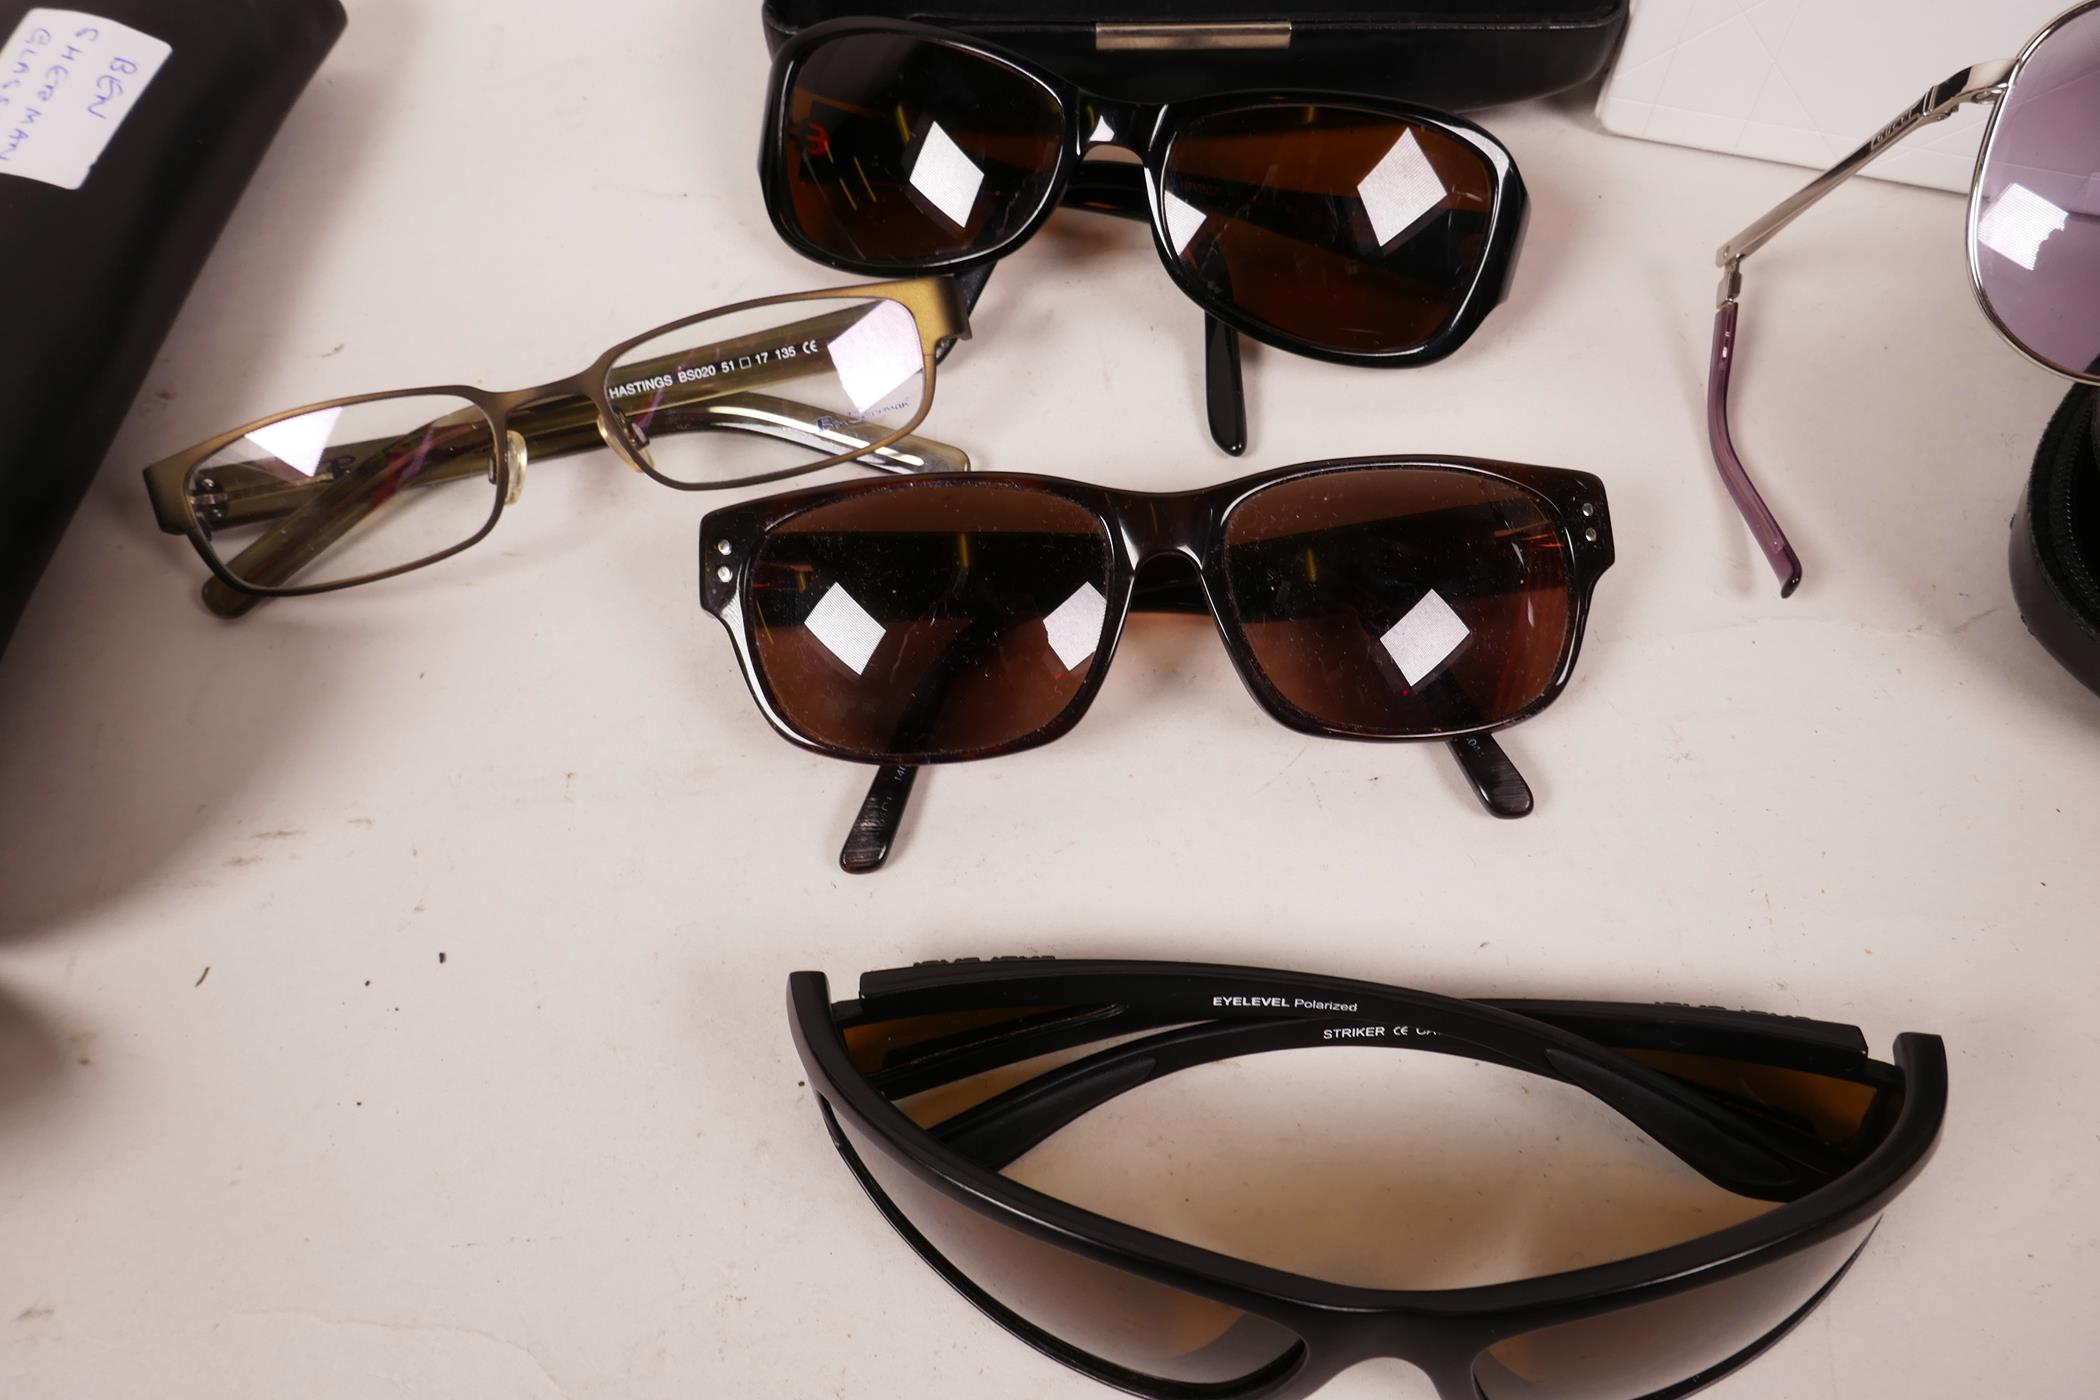 Six pairs of designer sunglasses including Jasper Conran, Ben Sherman etc - Image 2 of 3